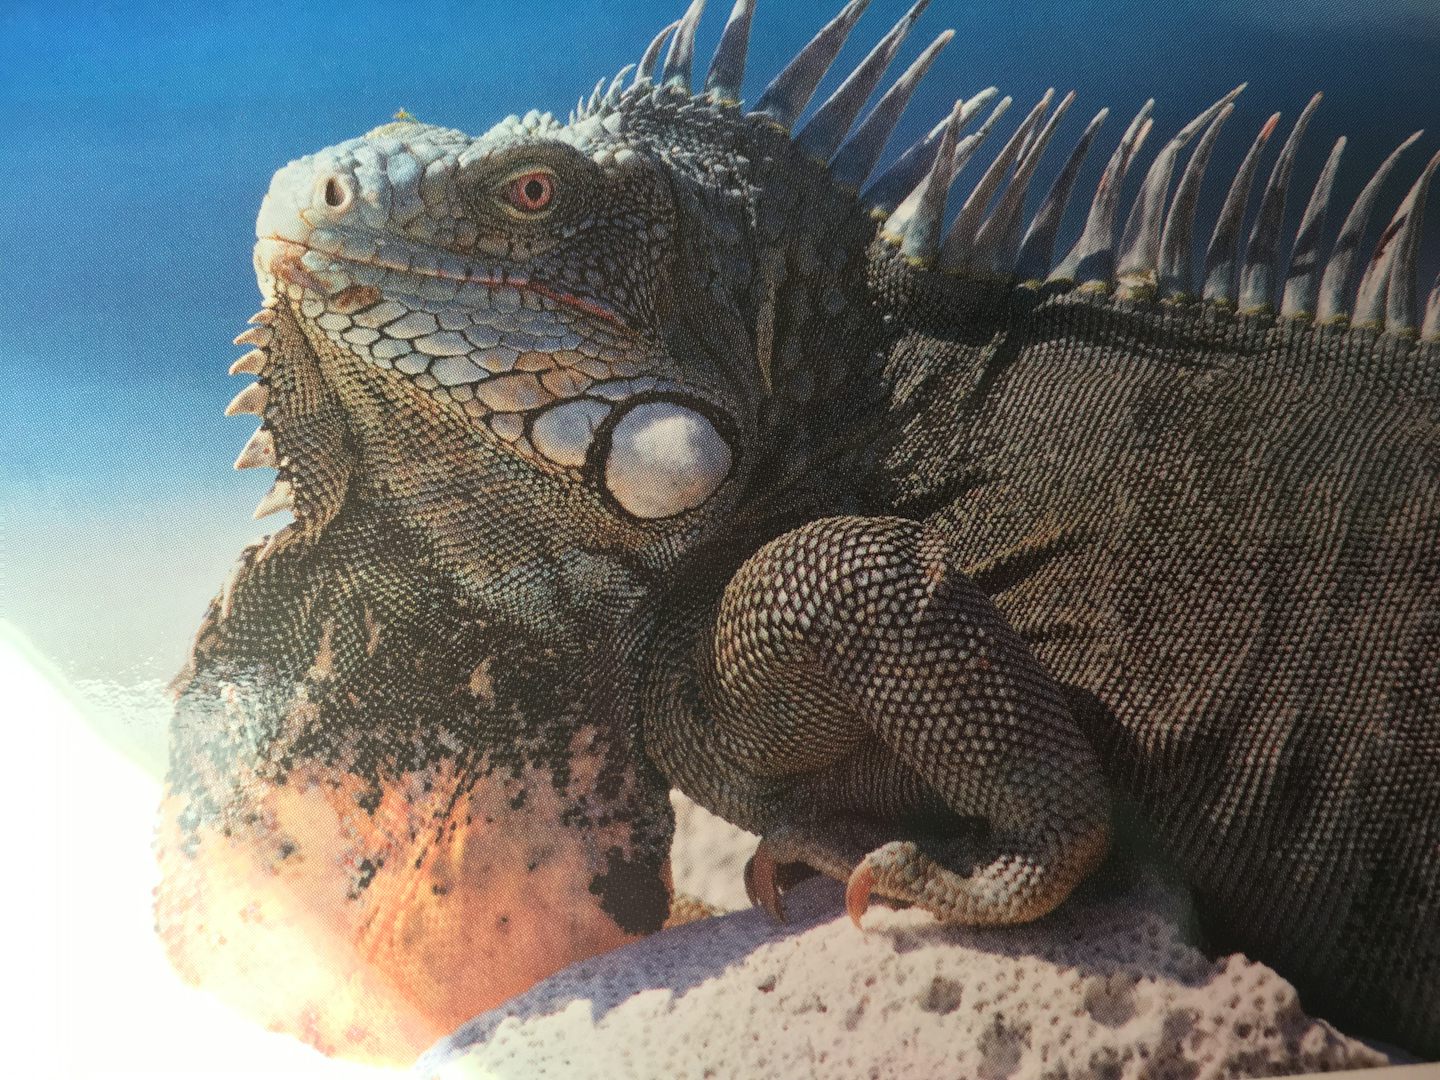 An iguana we encountered